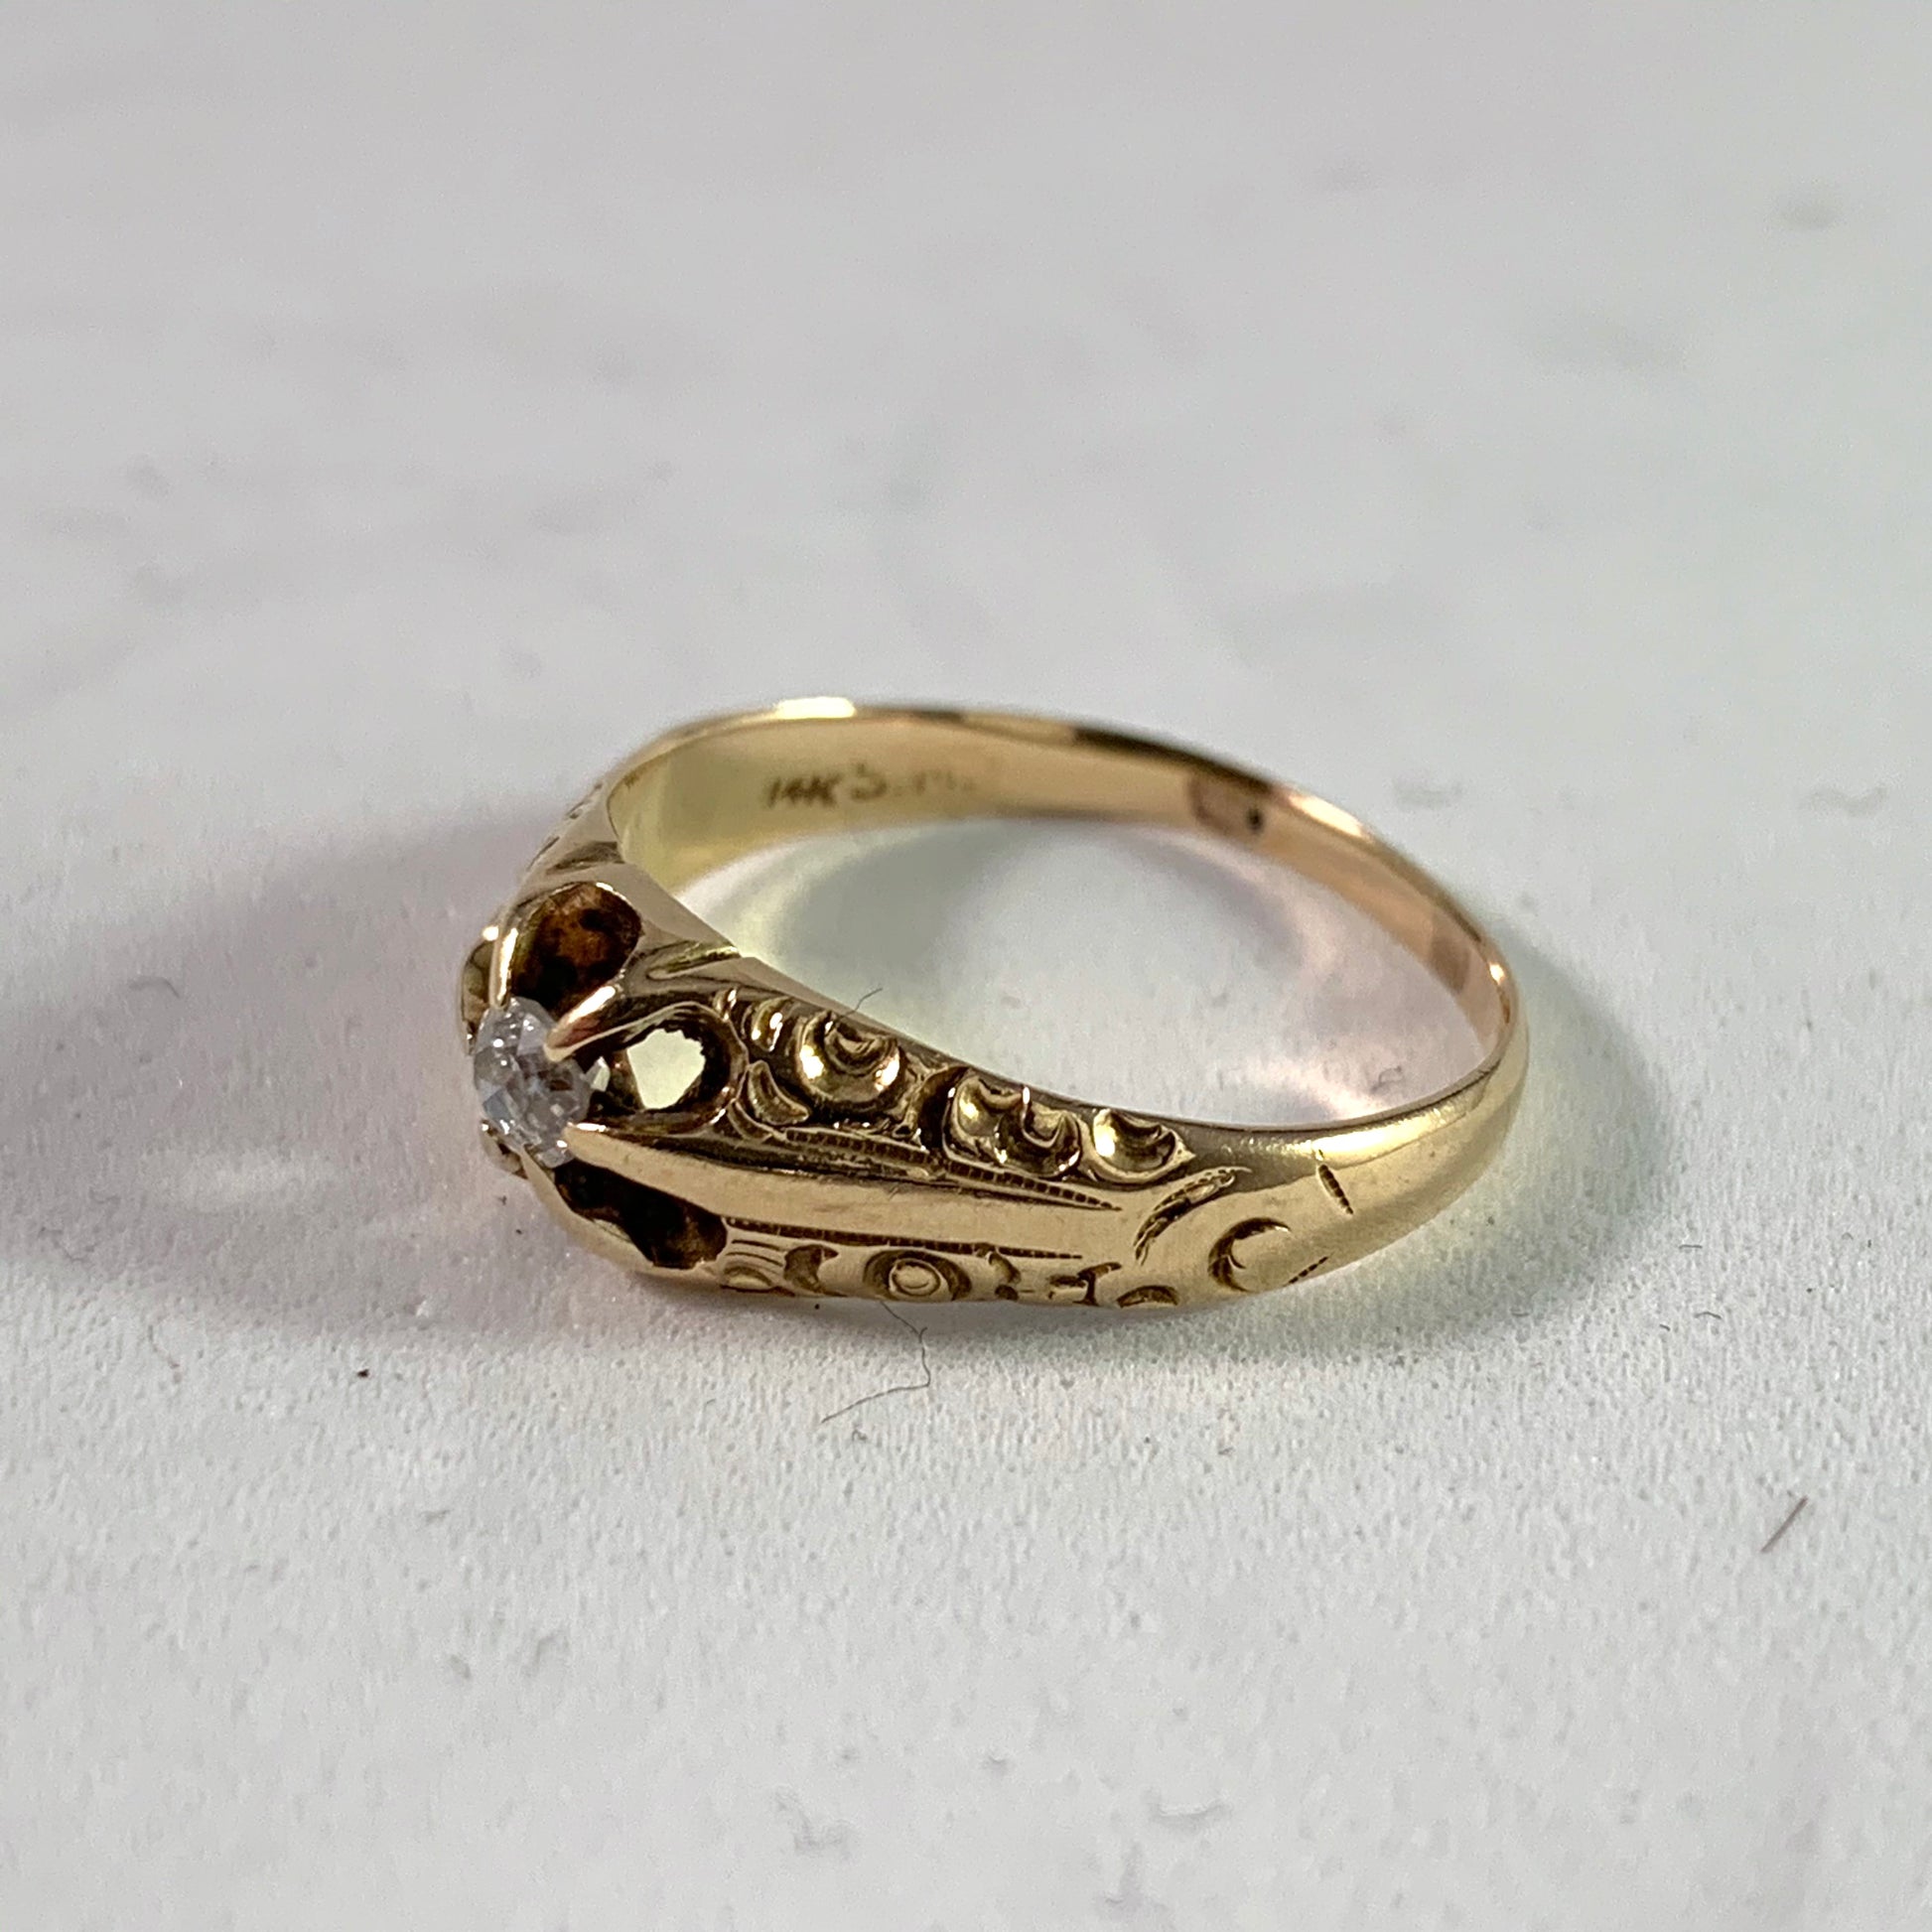 Edwardian 14k gold diamond engagement ring